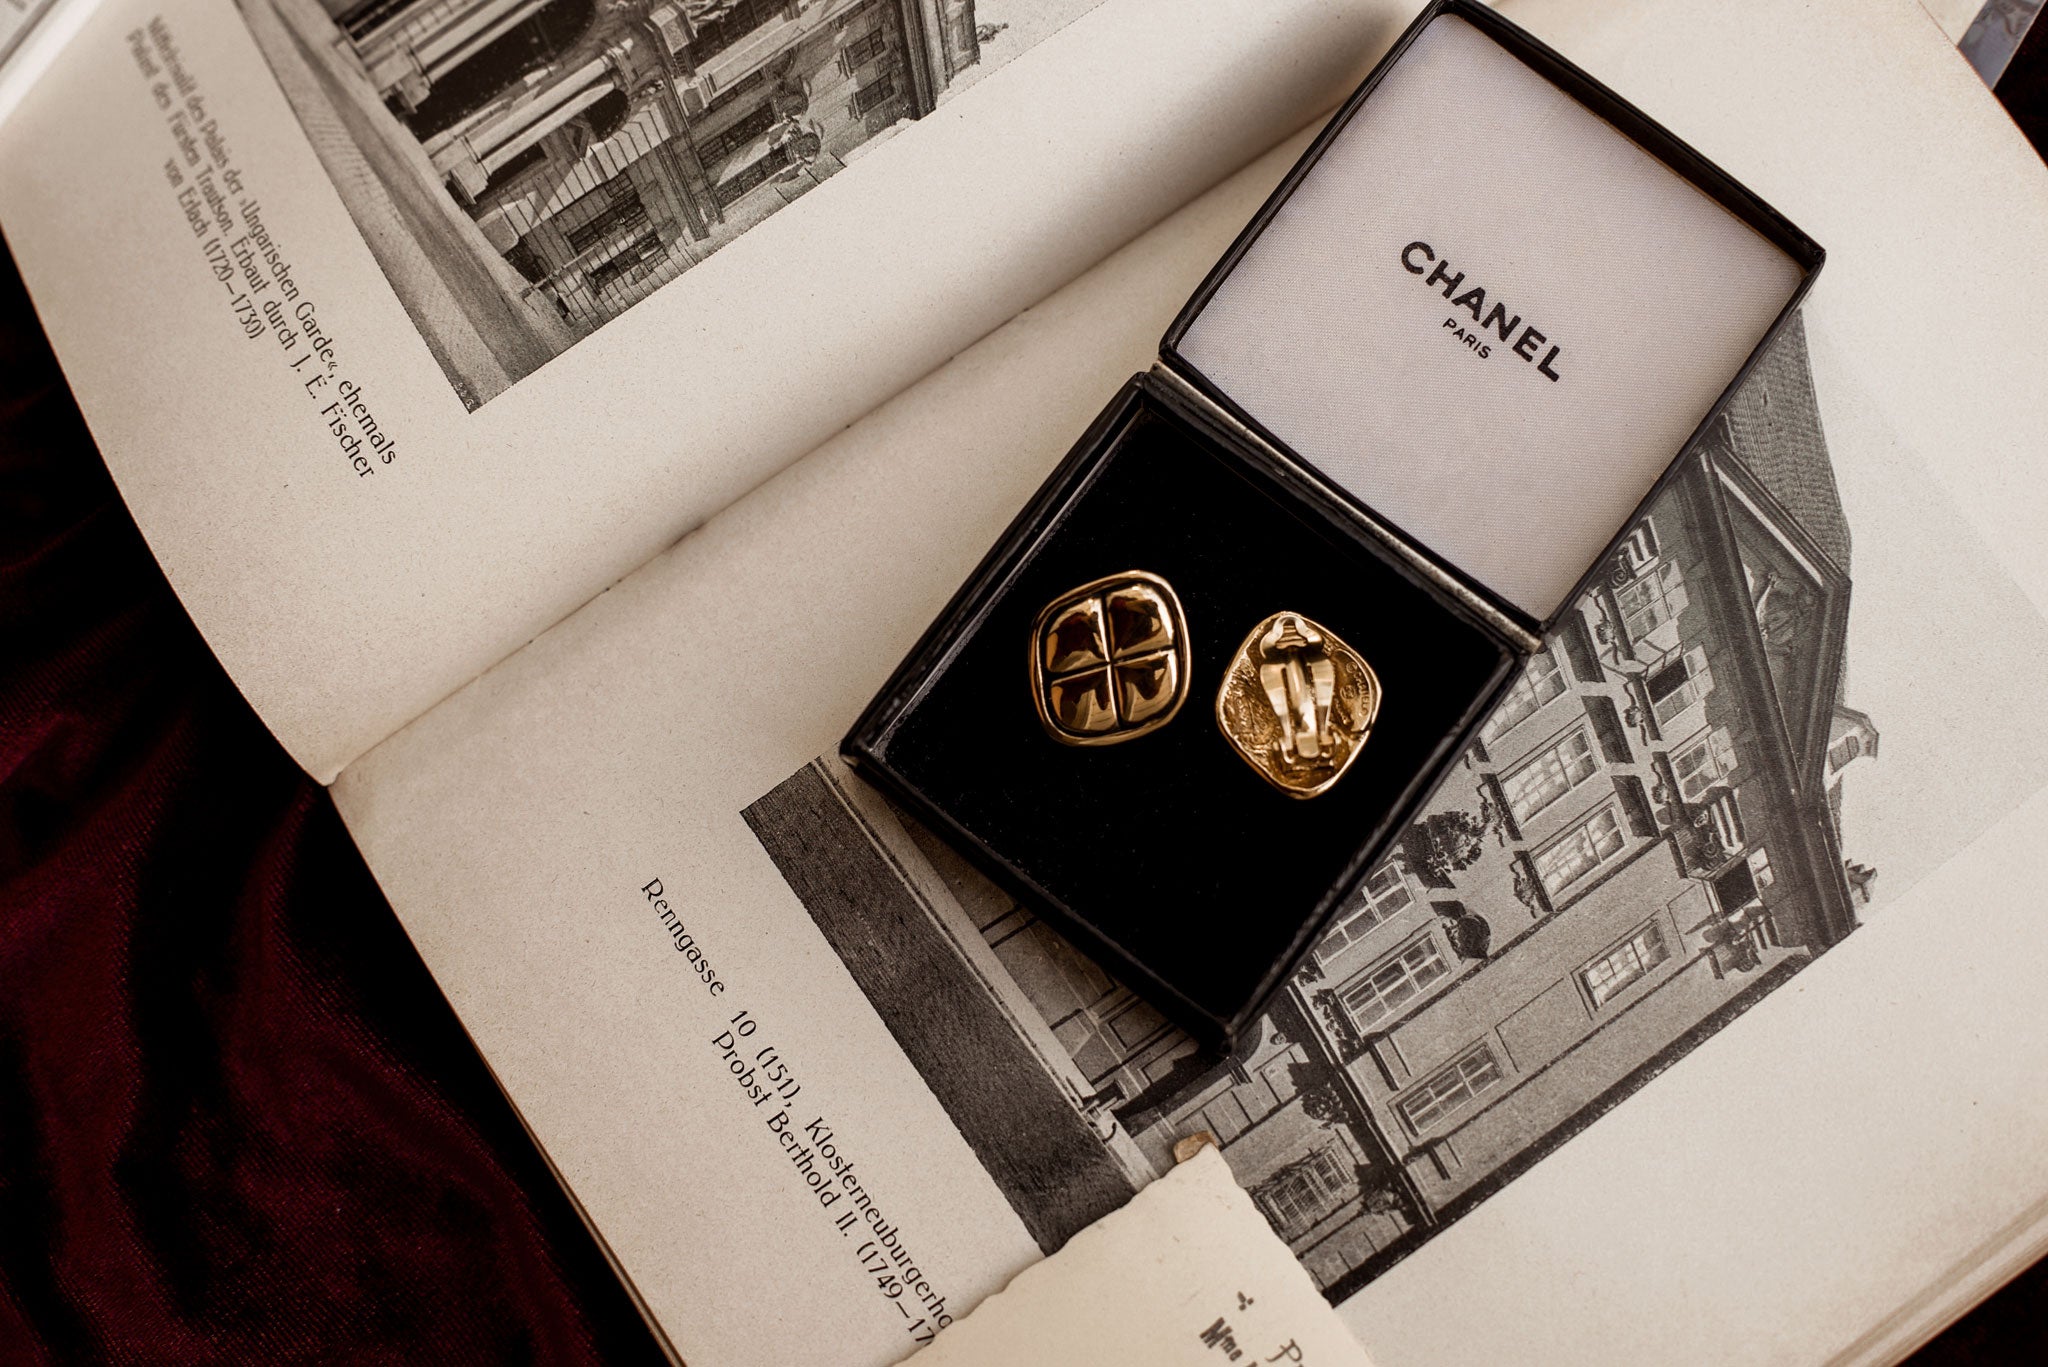 DIY Authentic Chanel Earrings!